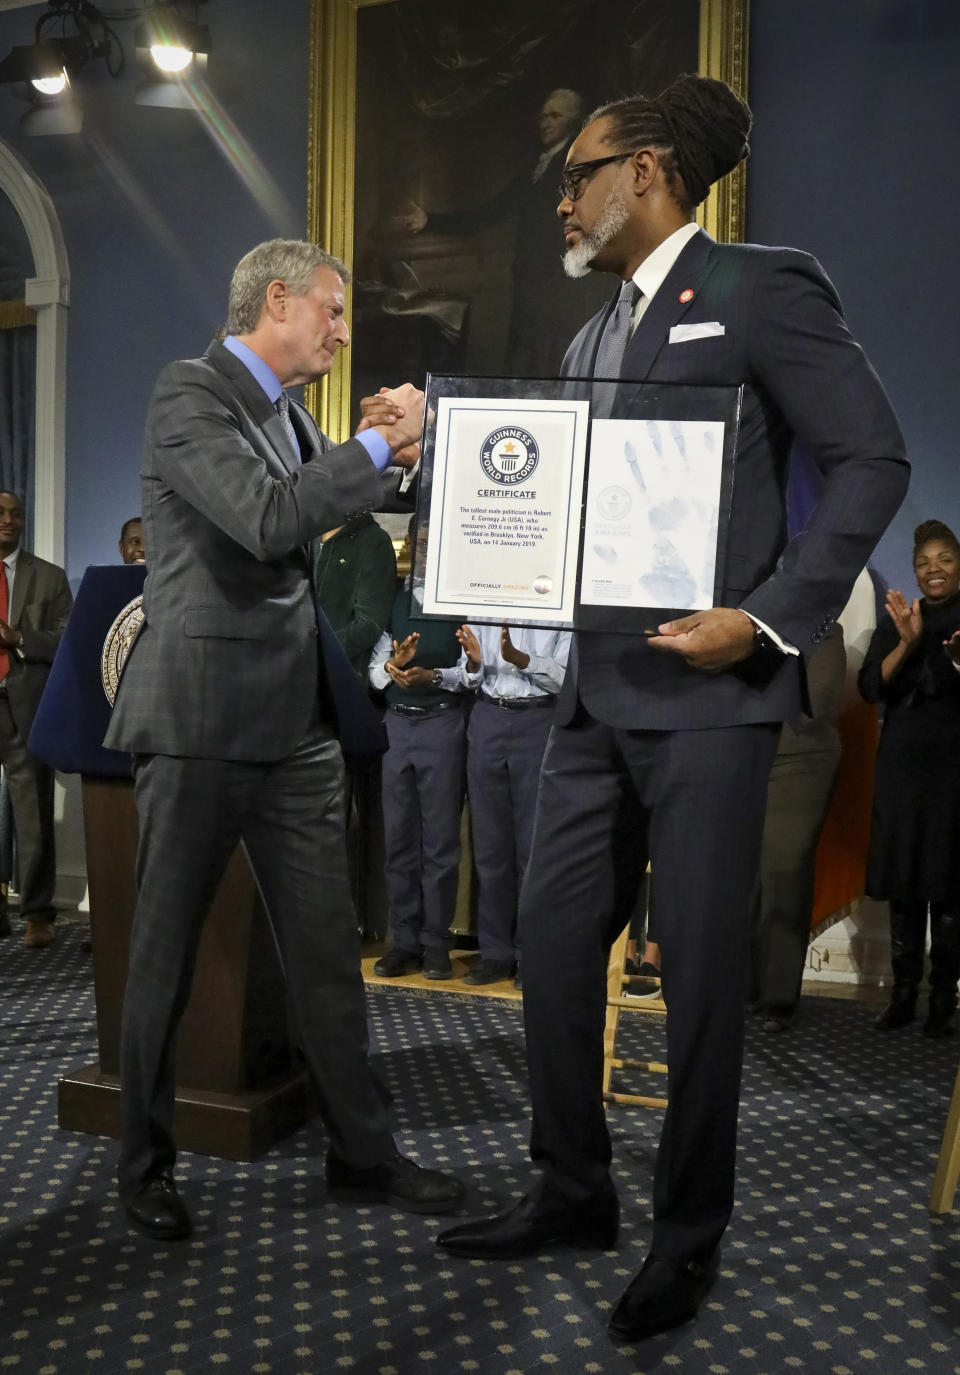 New York Mayor Bill de Blasio, left, awards N.Y. City Councilman Robert Cornegy, Jr. the Guinness World Record's tallest male politician, Wednesday March 27, 2019, at City Hall in New York. (AP Photo/Bebeto Matthews)